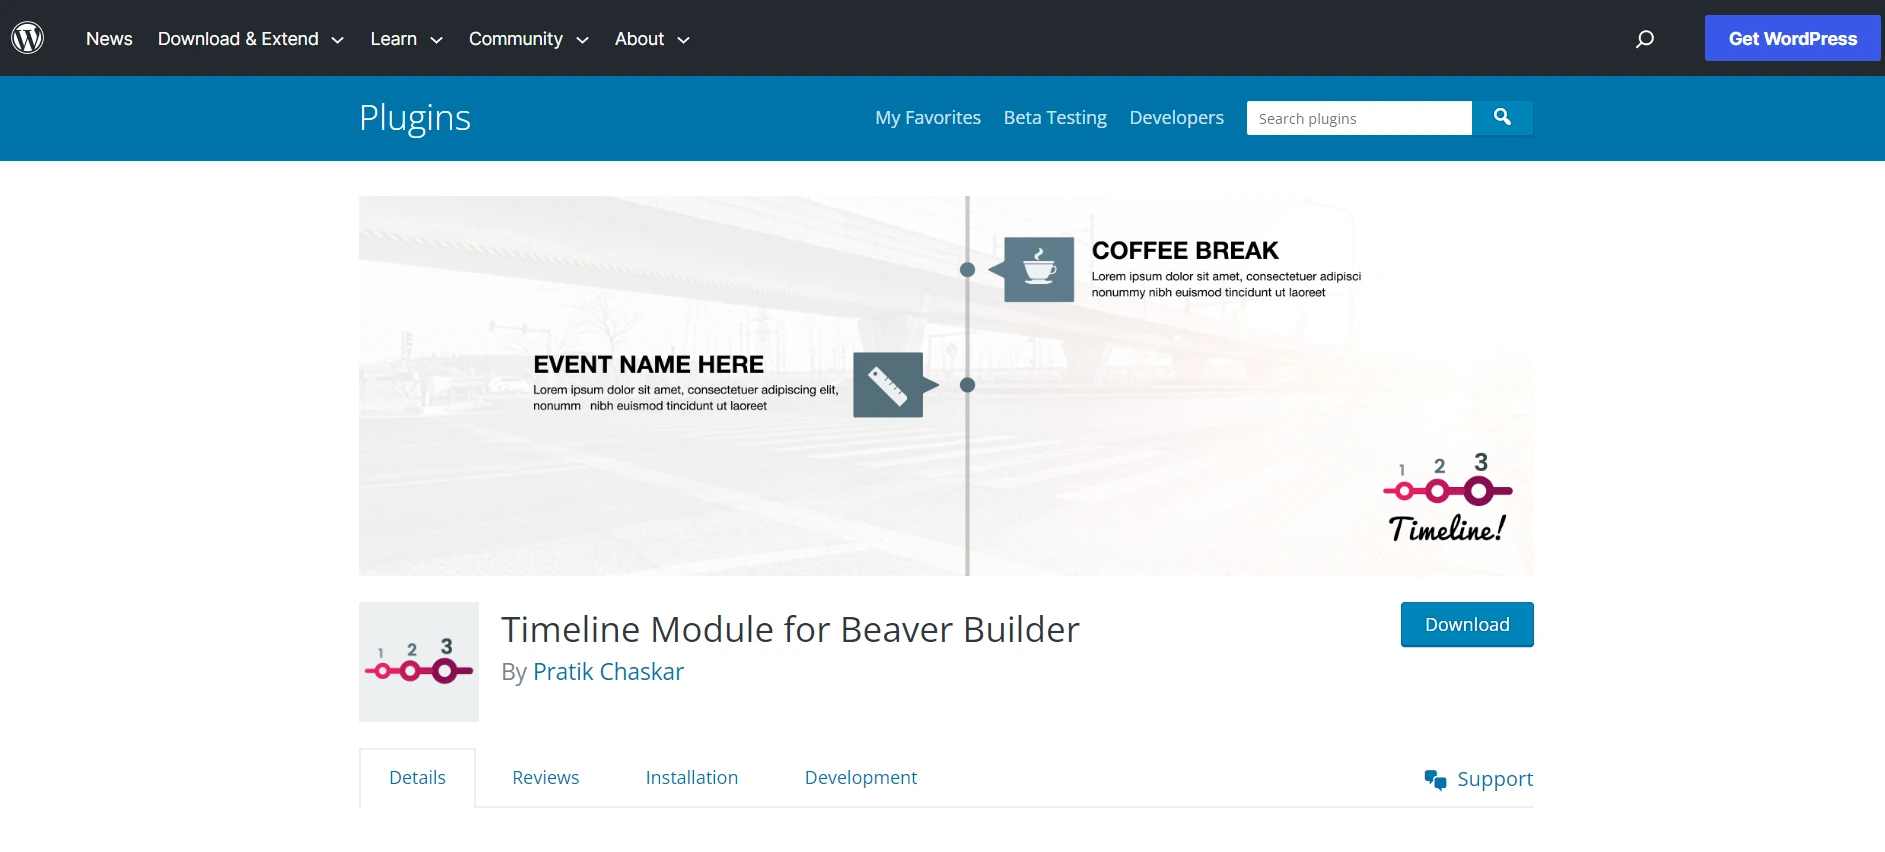 Timeline module for Beaver Builder